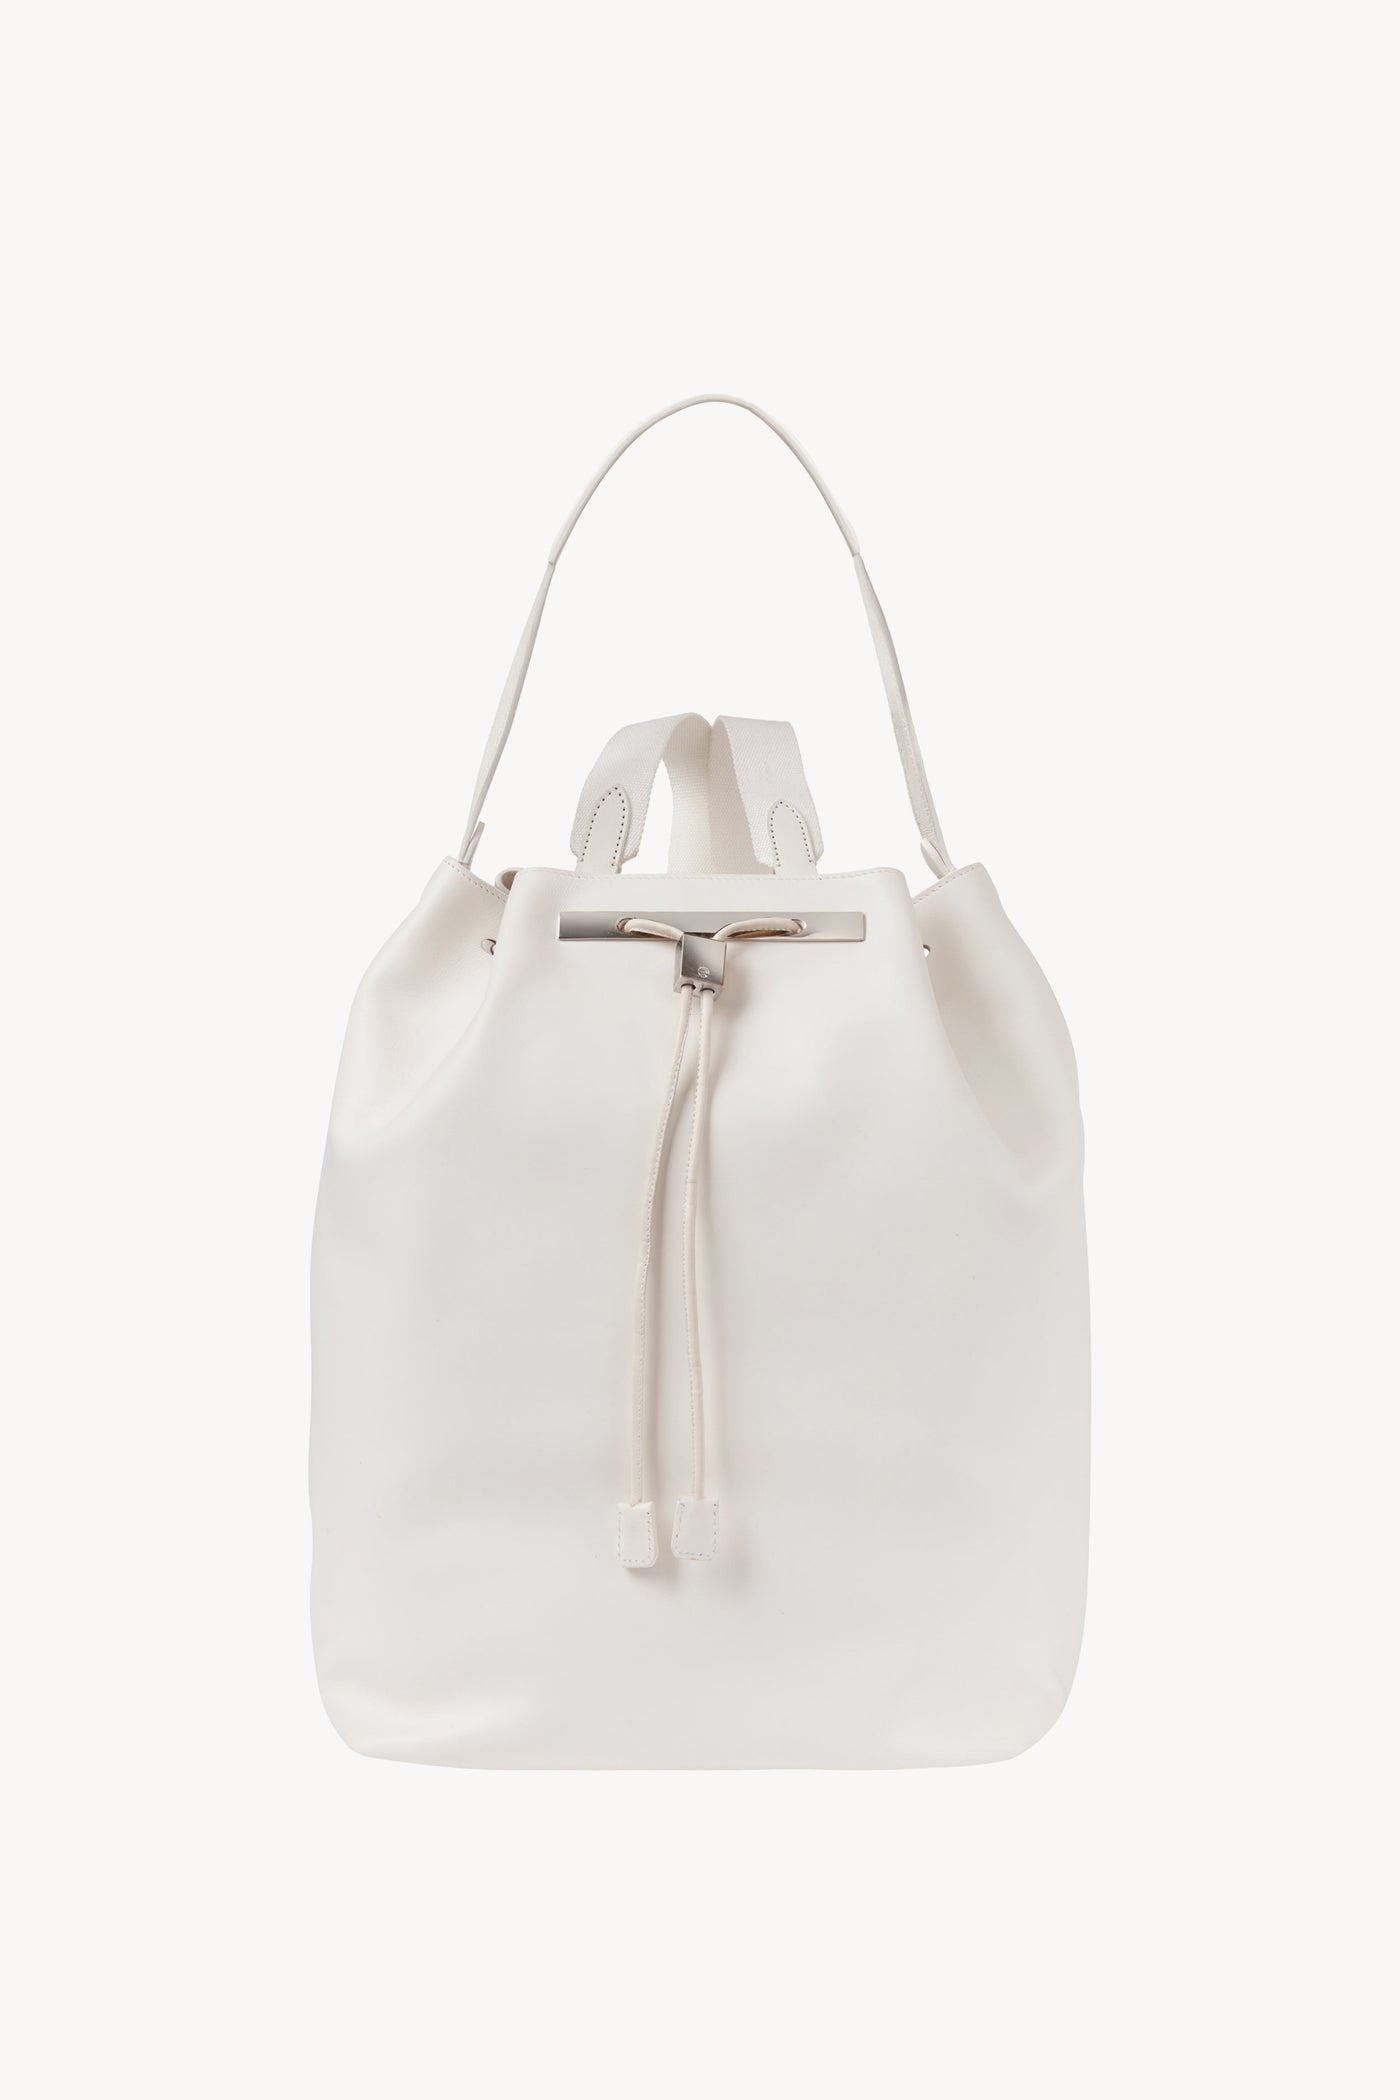 Back Bag White - The Row - Ileana Makri store